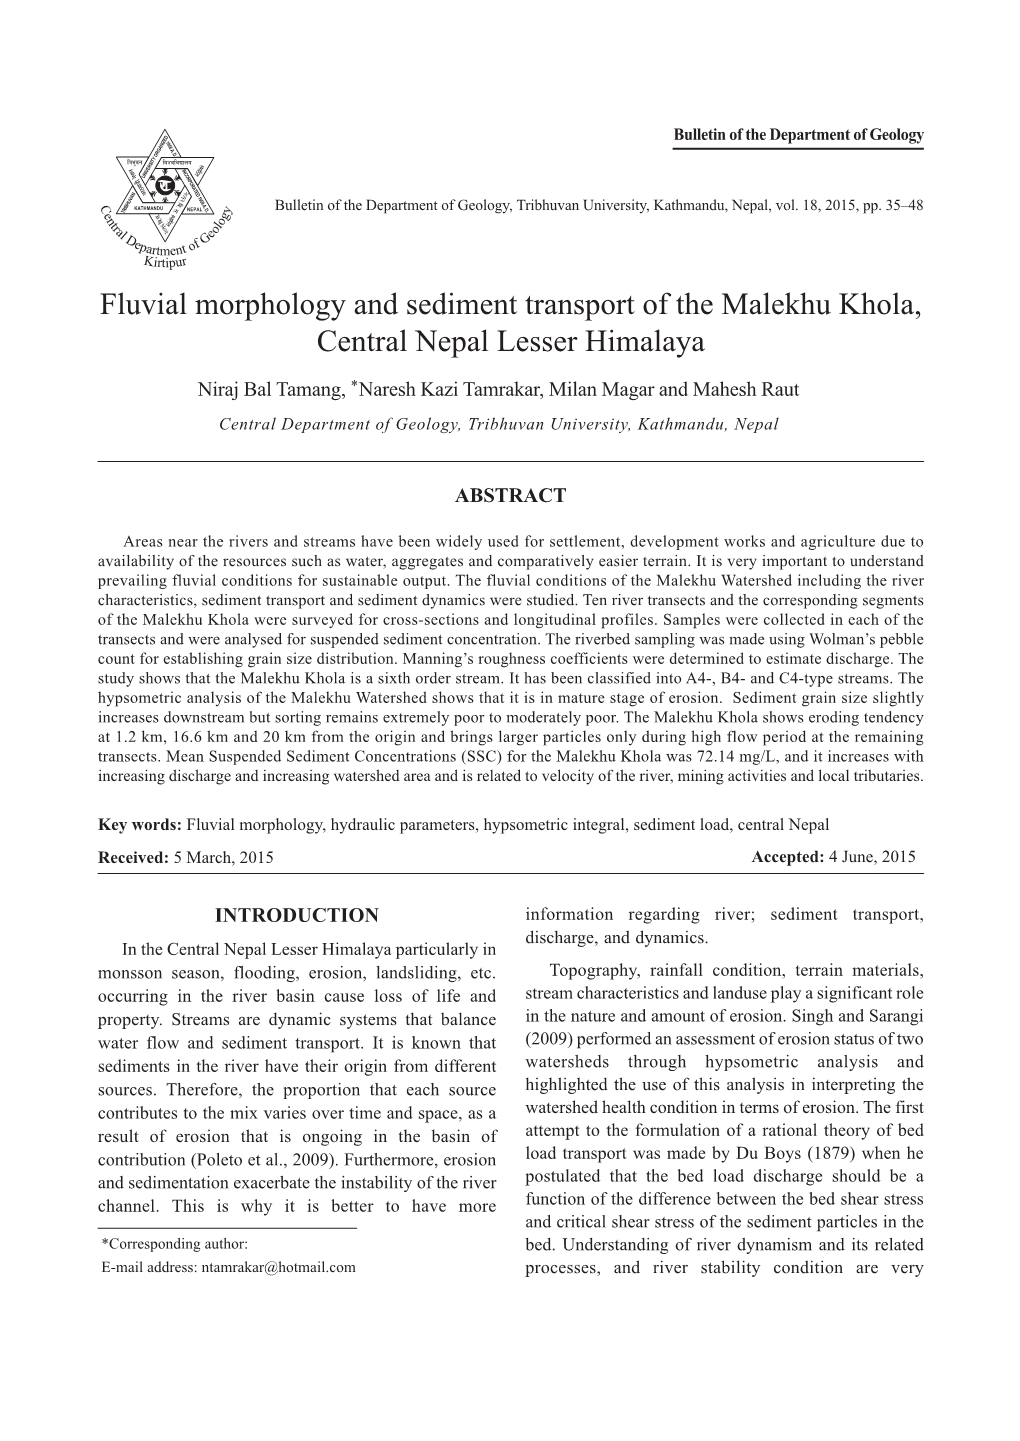 Fluvial Morphology and Sediment Transport of the Malekhu Khola, Central Nepal Lesser Himalaya